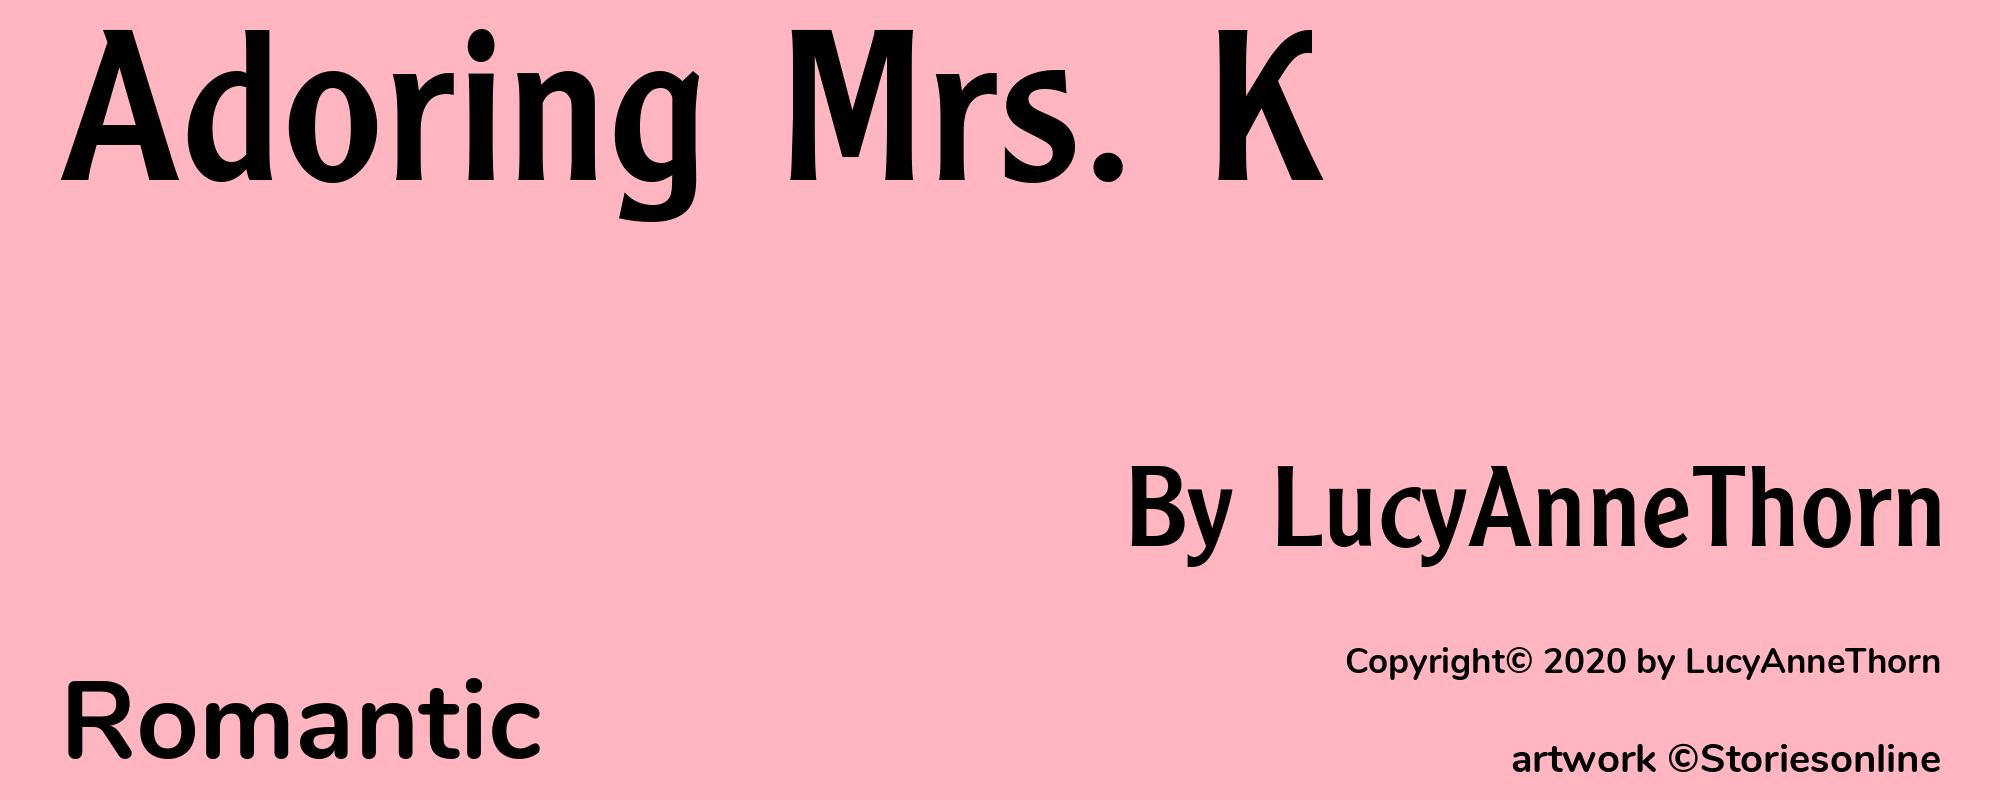 Adoring Mrs. K - Cover